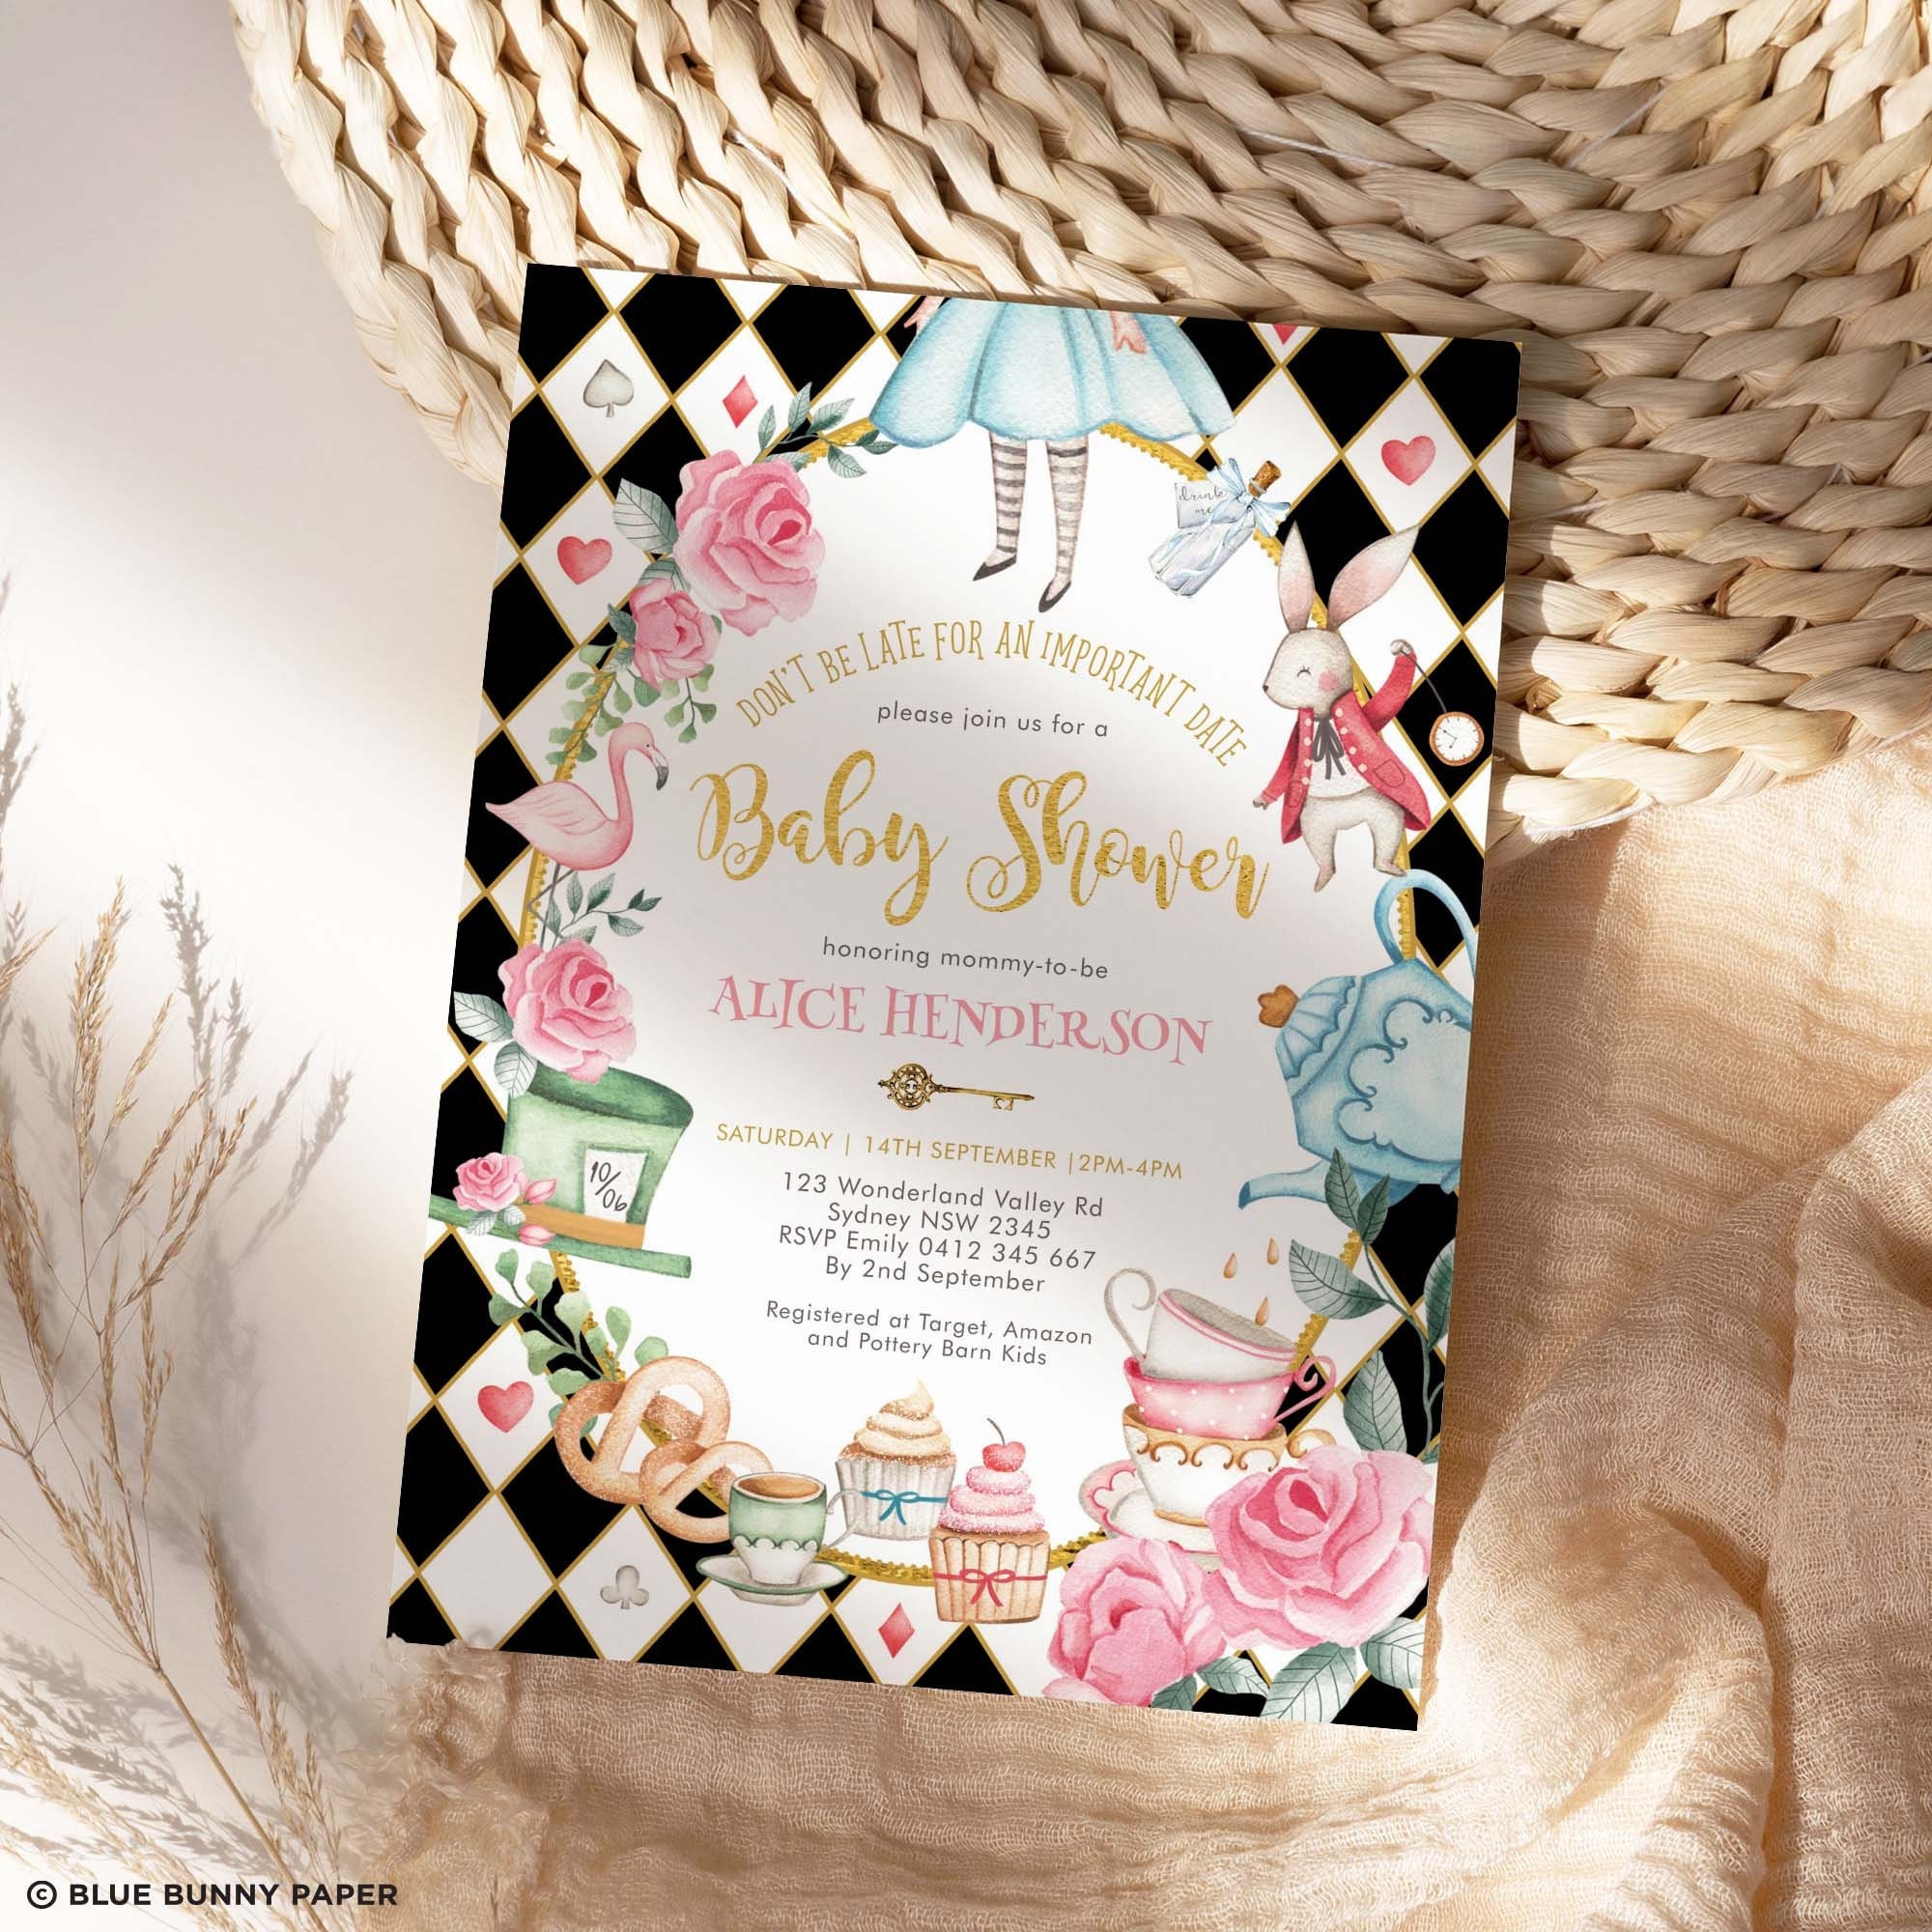 Alice in Wonderland Mad Hatter's Tea Party Printed Baby Shower Invitat -  swirly-world-design